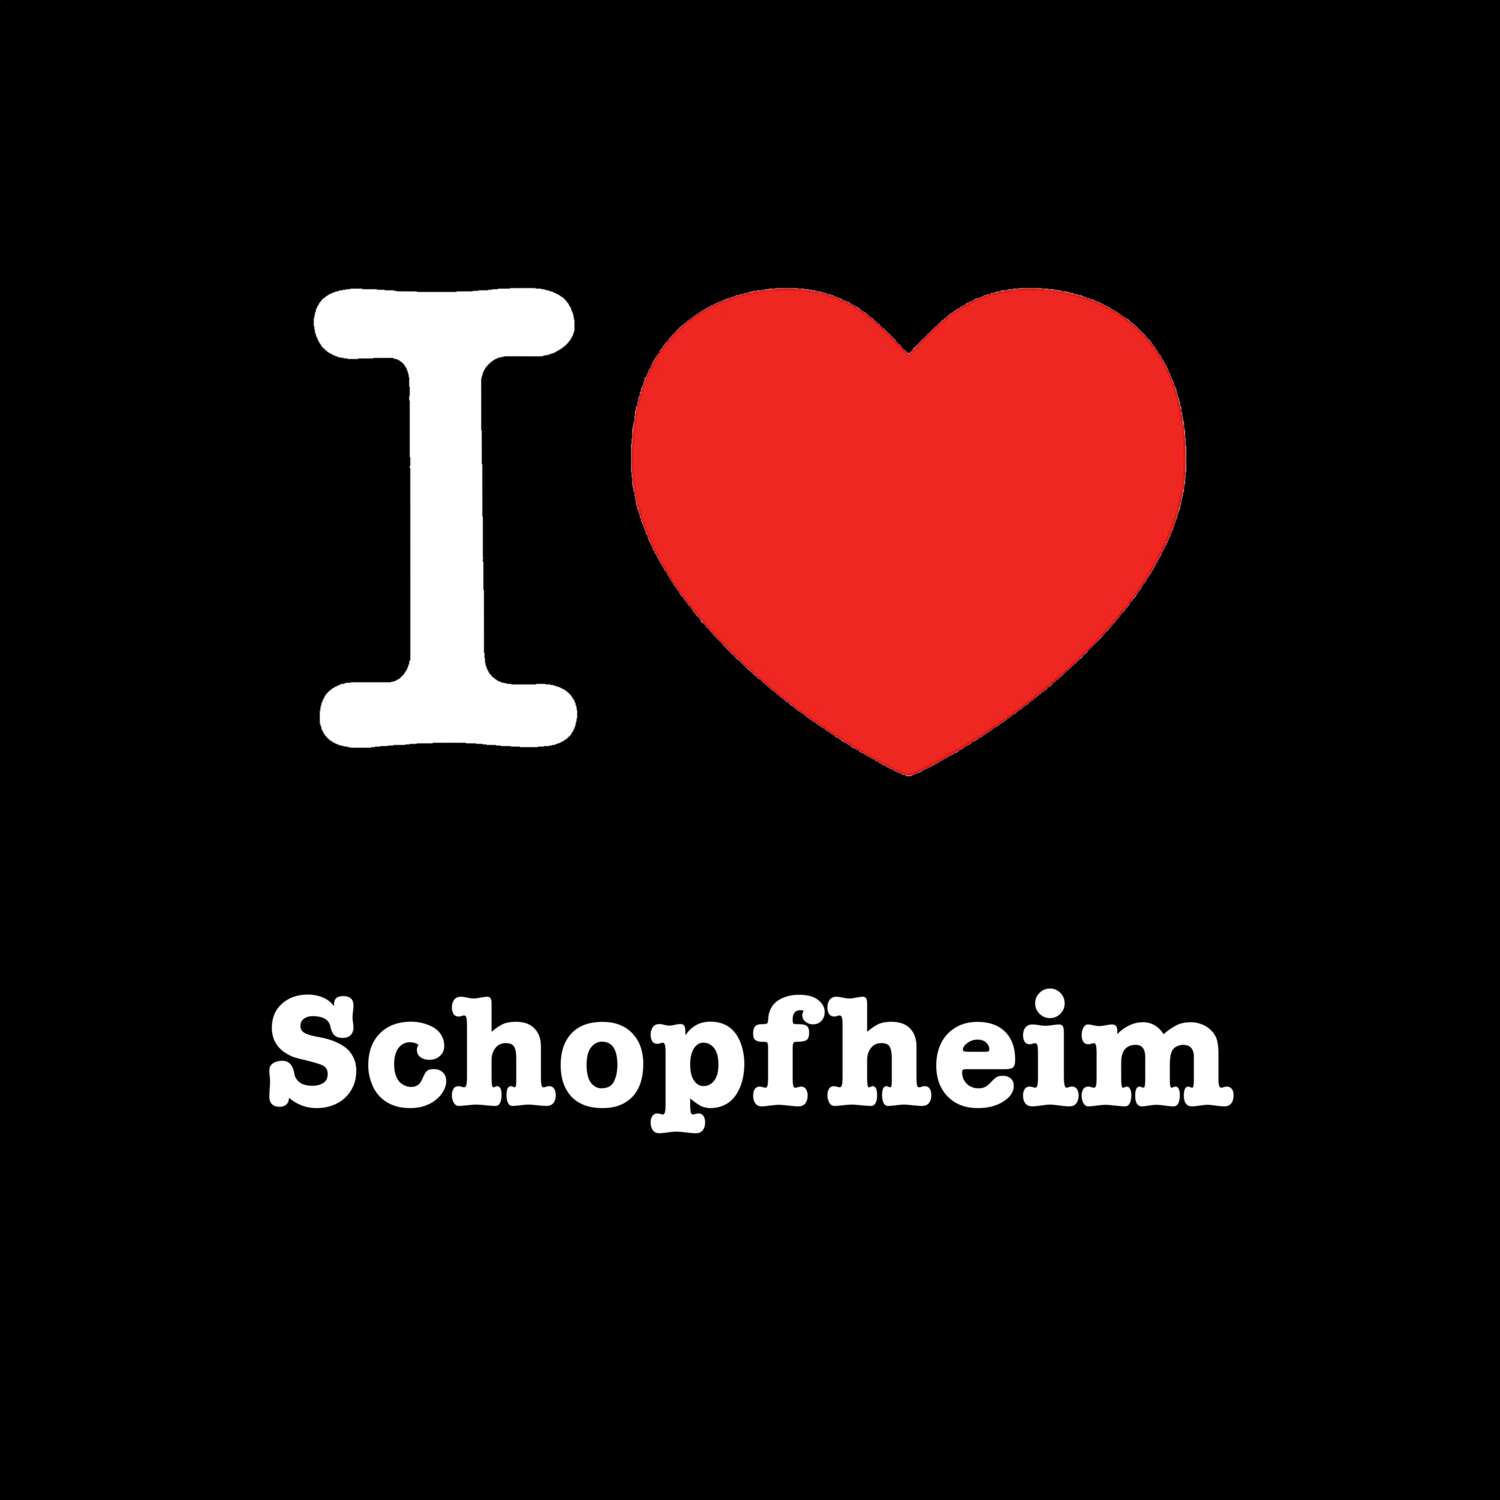 Schopfheim T-Shirt »I love«